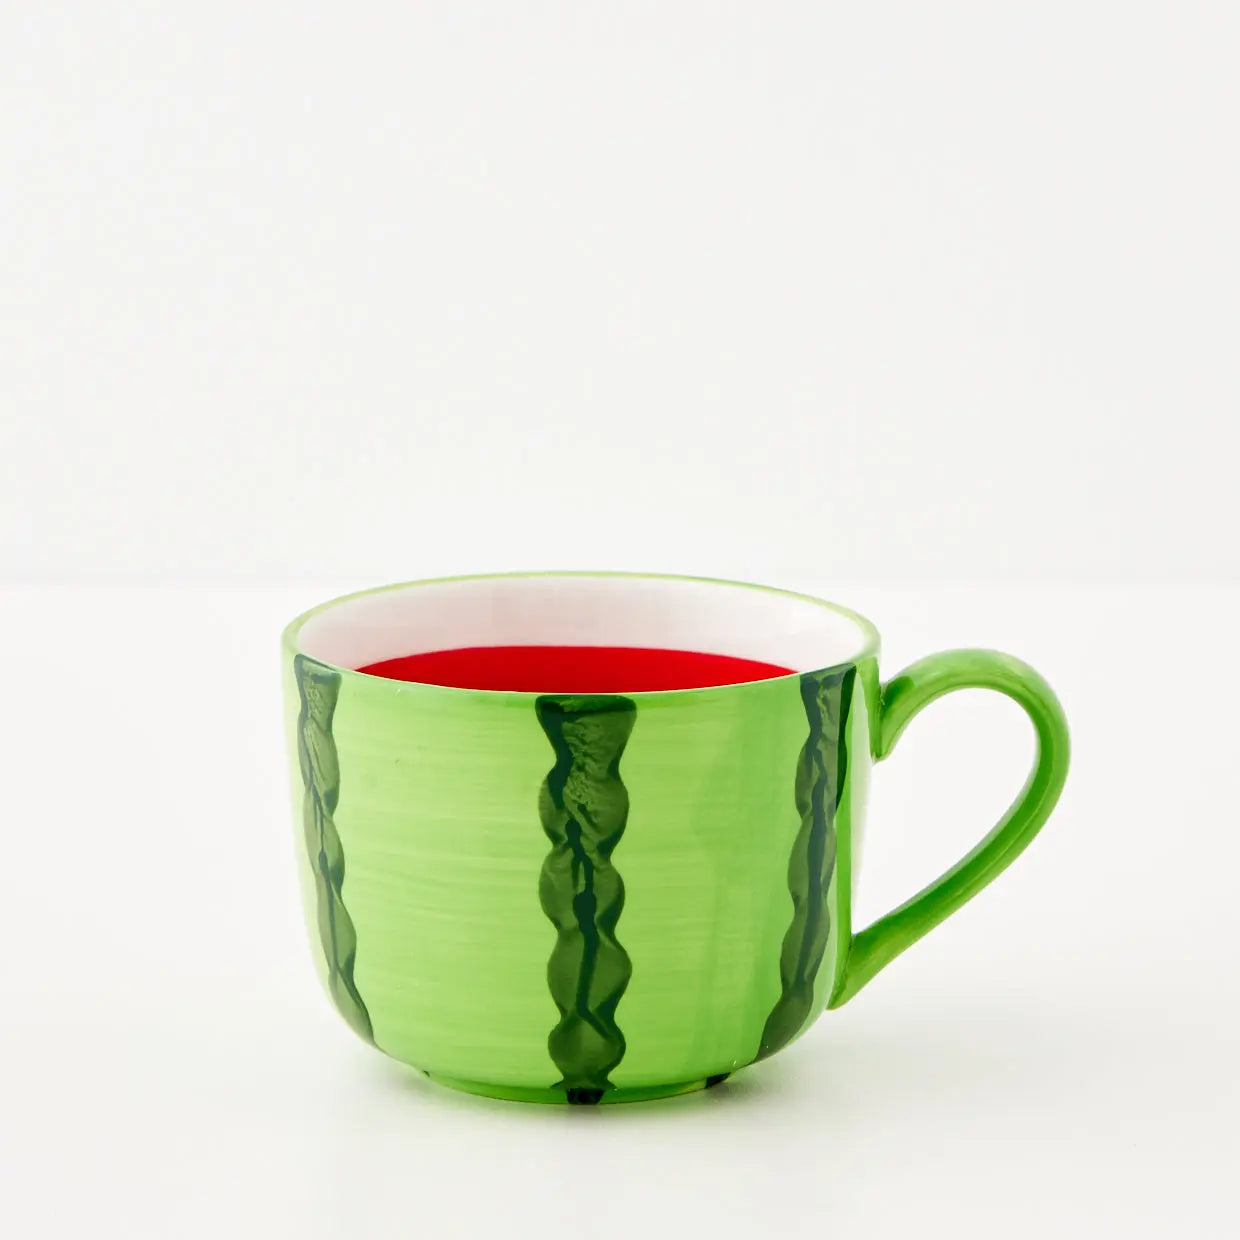 Watermelon Ceramic Mug Red - GigiandTom